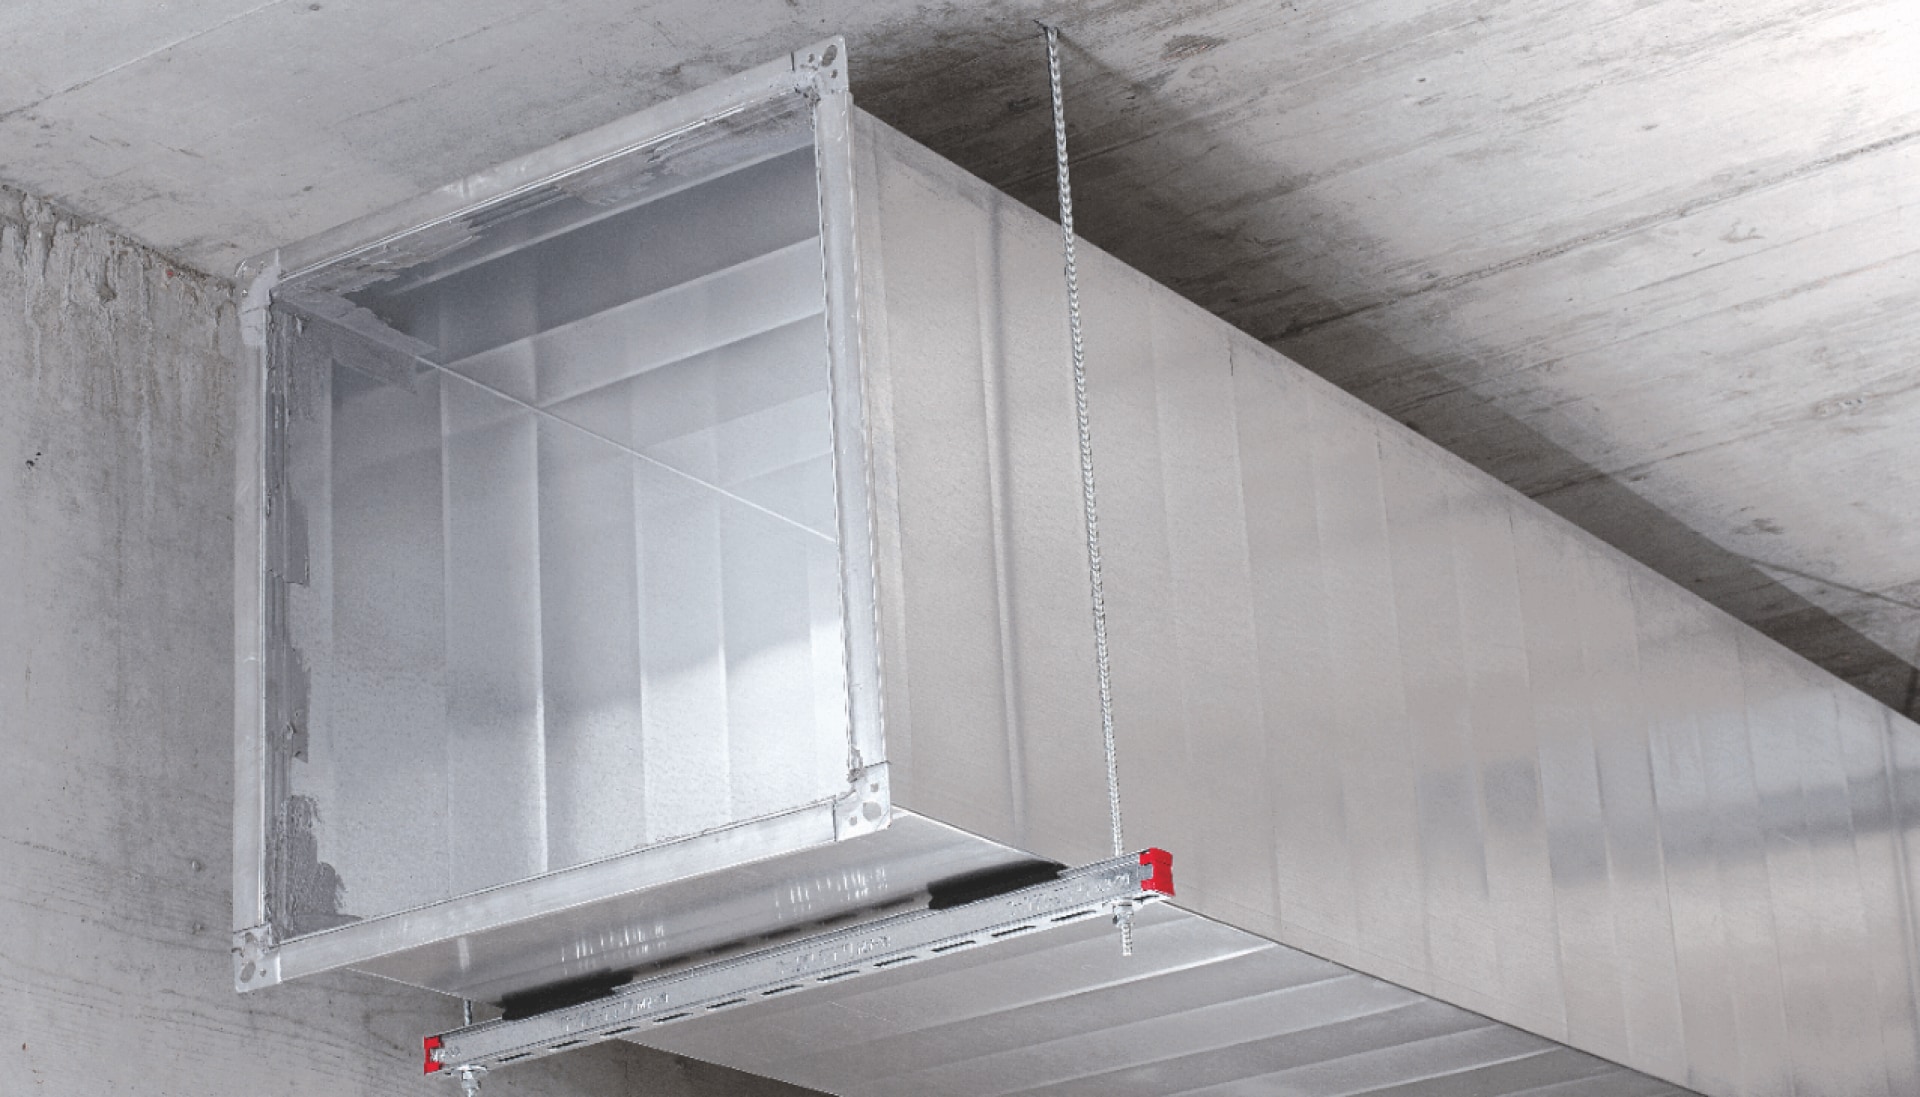 Hilti modular support system for ventilation MV-RI rubber inlay for MV-30 channel